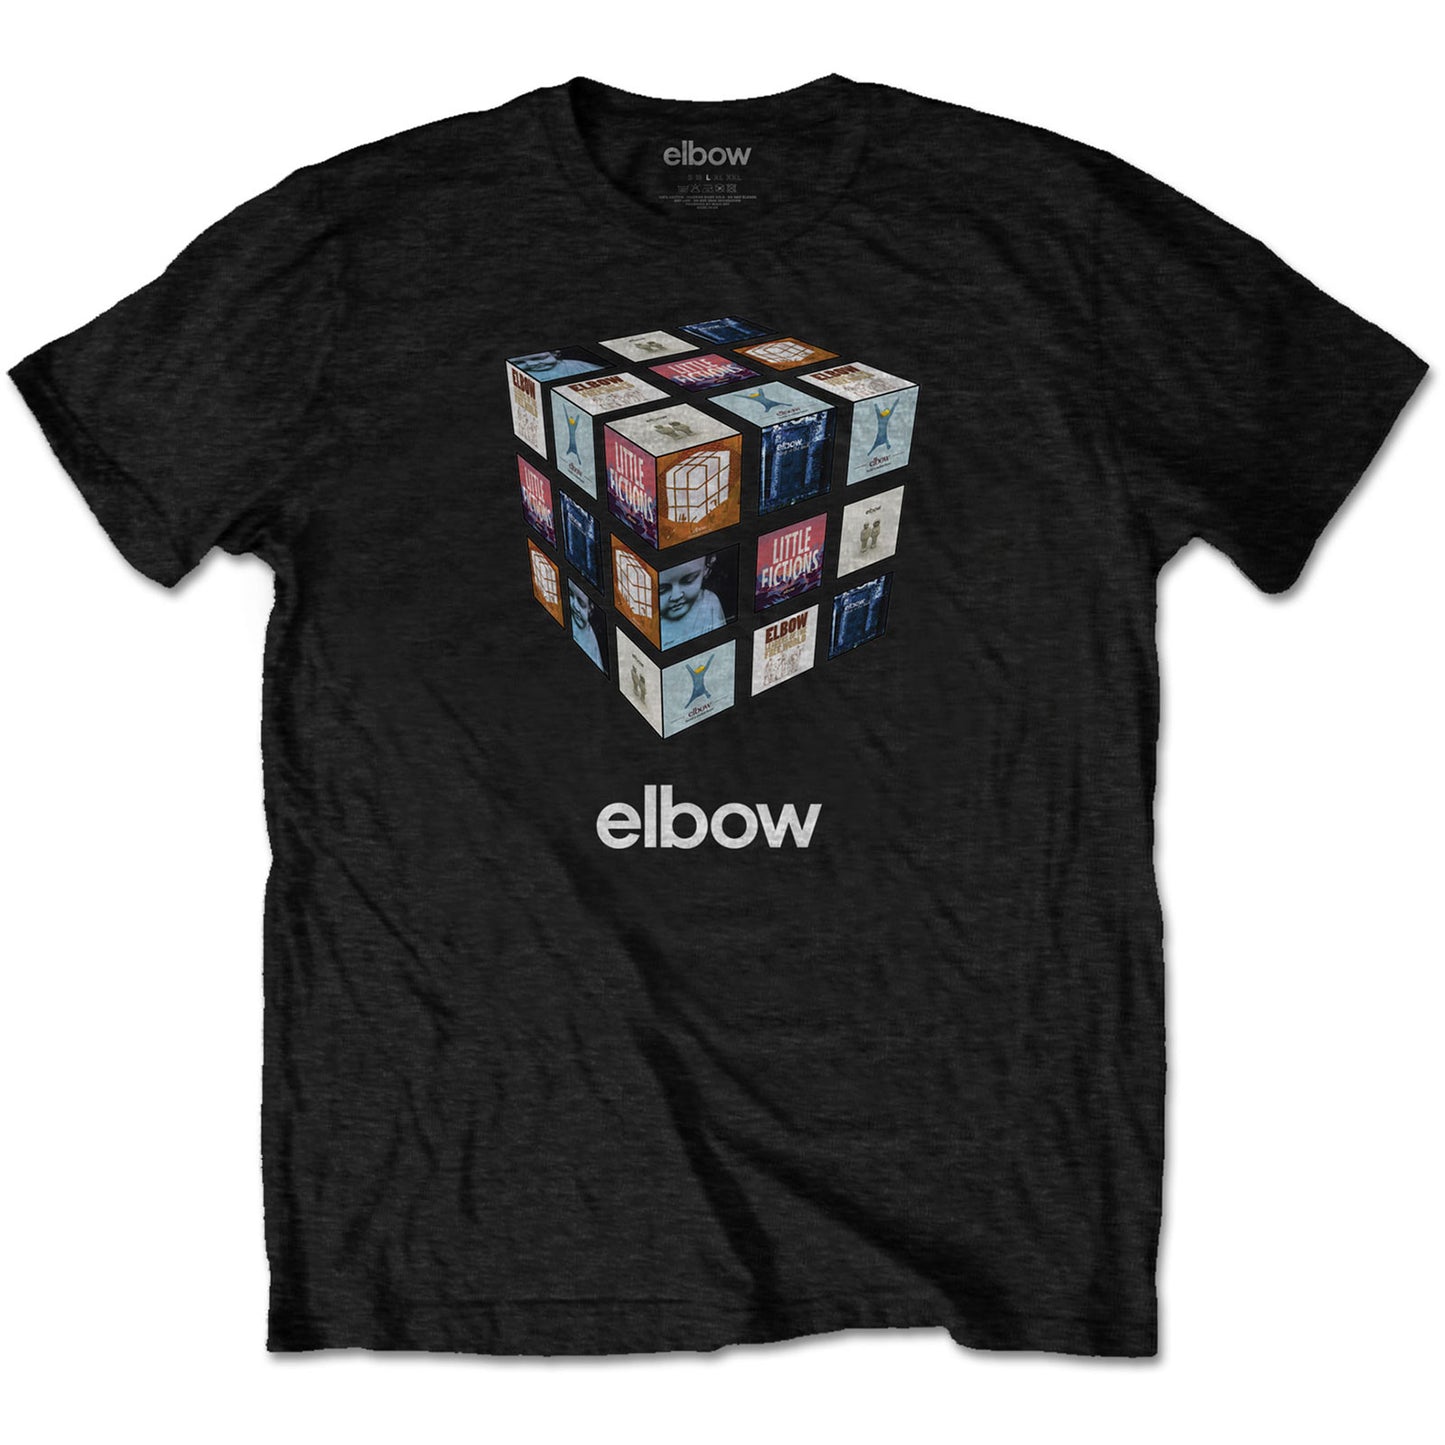 Elbow T-Shirt: Best of